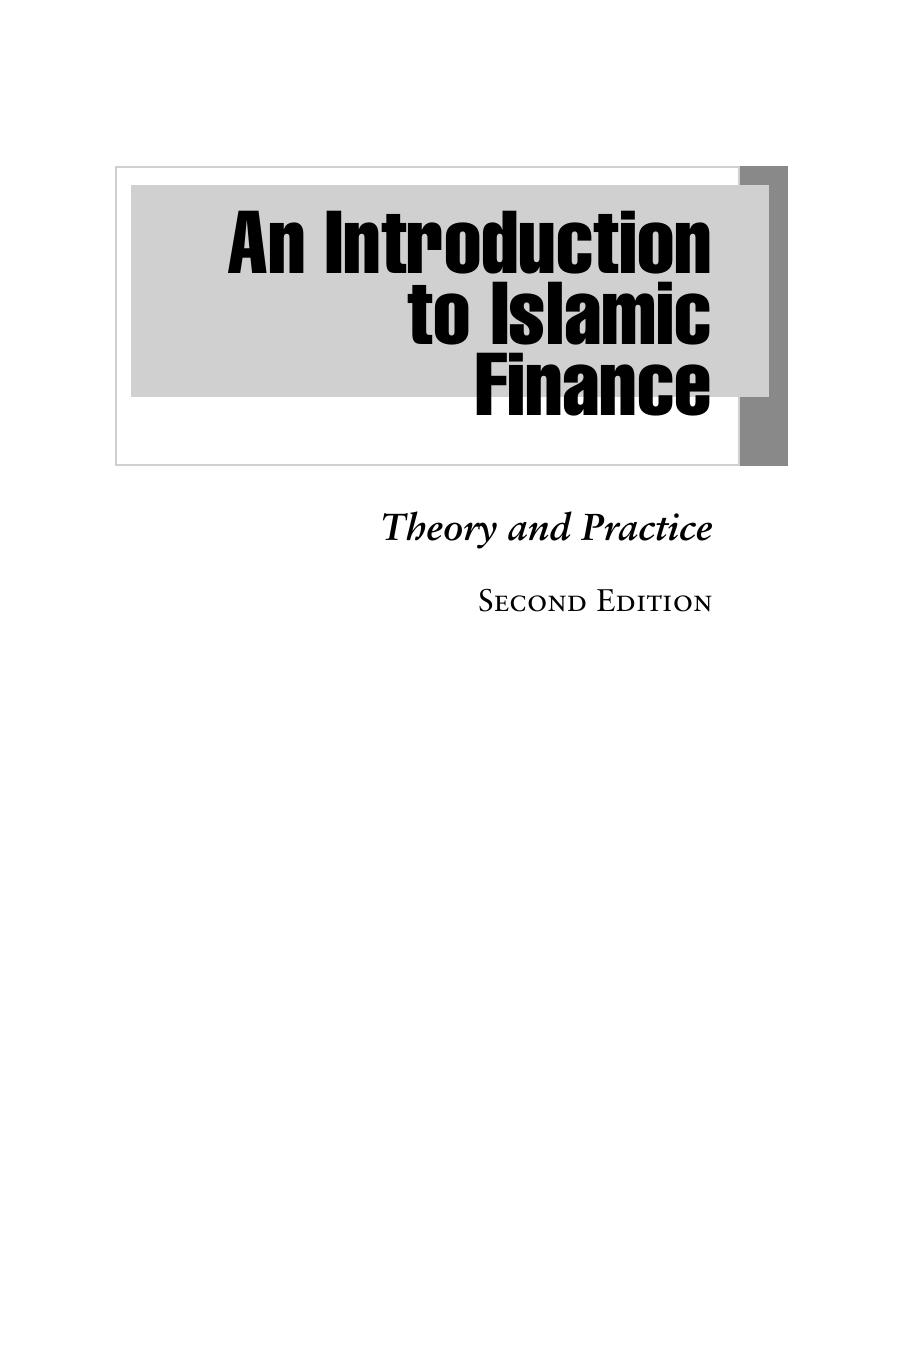 An Introduction-to-Islamic-Finance 2nd ed. 2011.pdf